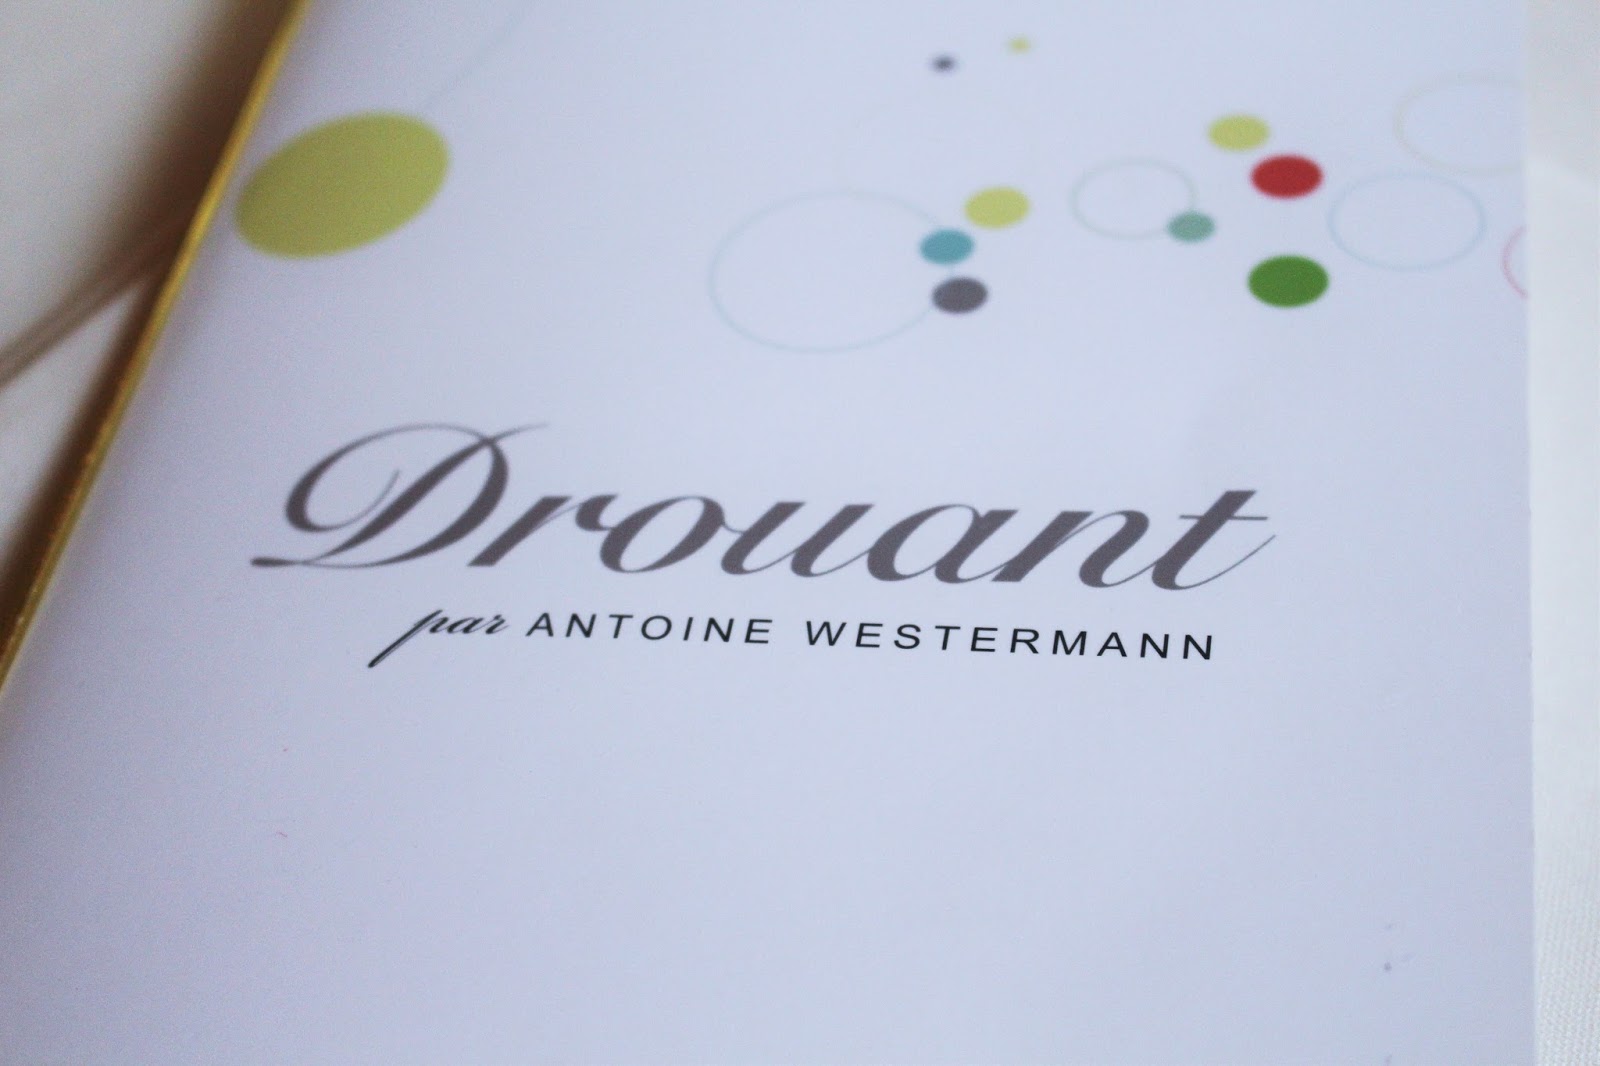 Dinner at Drouant by Antoine Westermann - Paris Michelin-starred restaurants - UK lifestyle blog